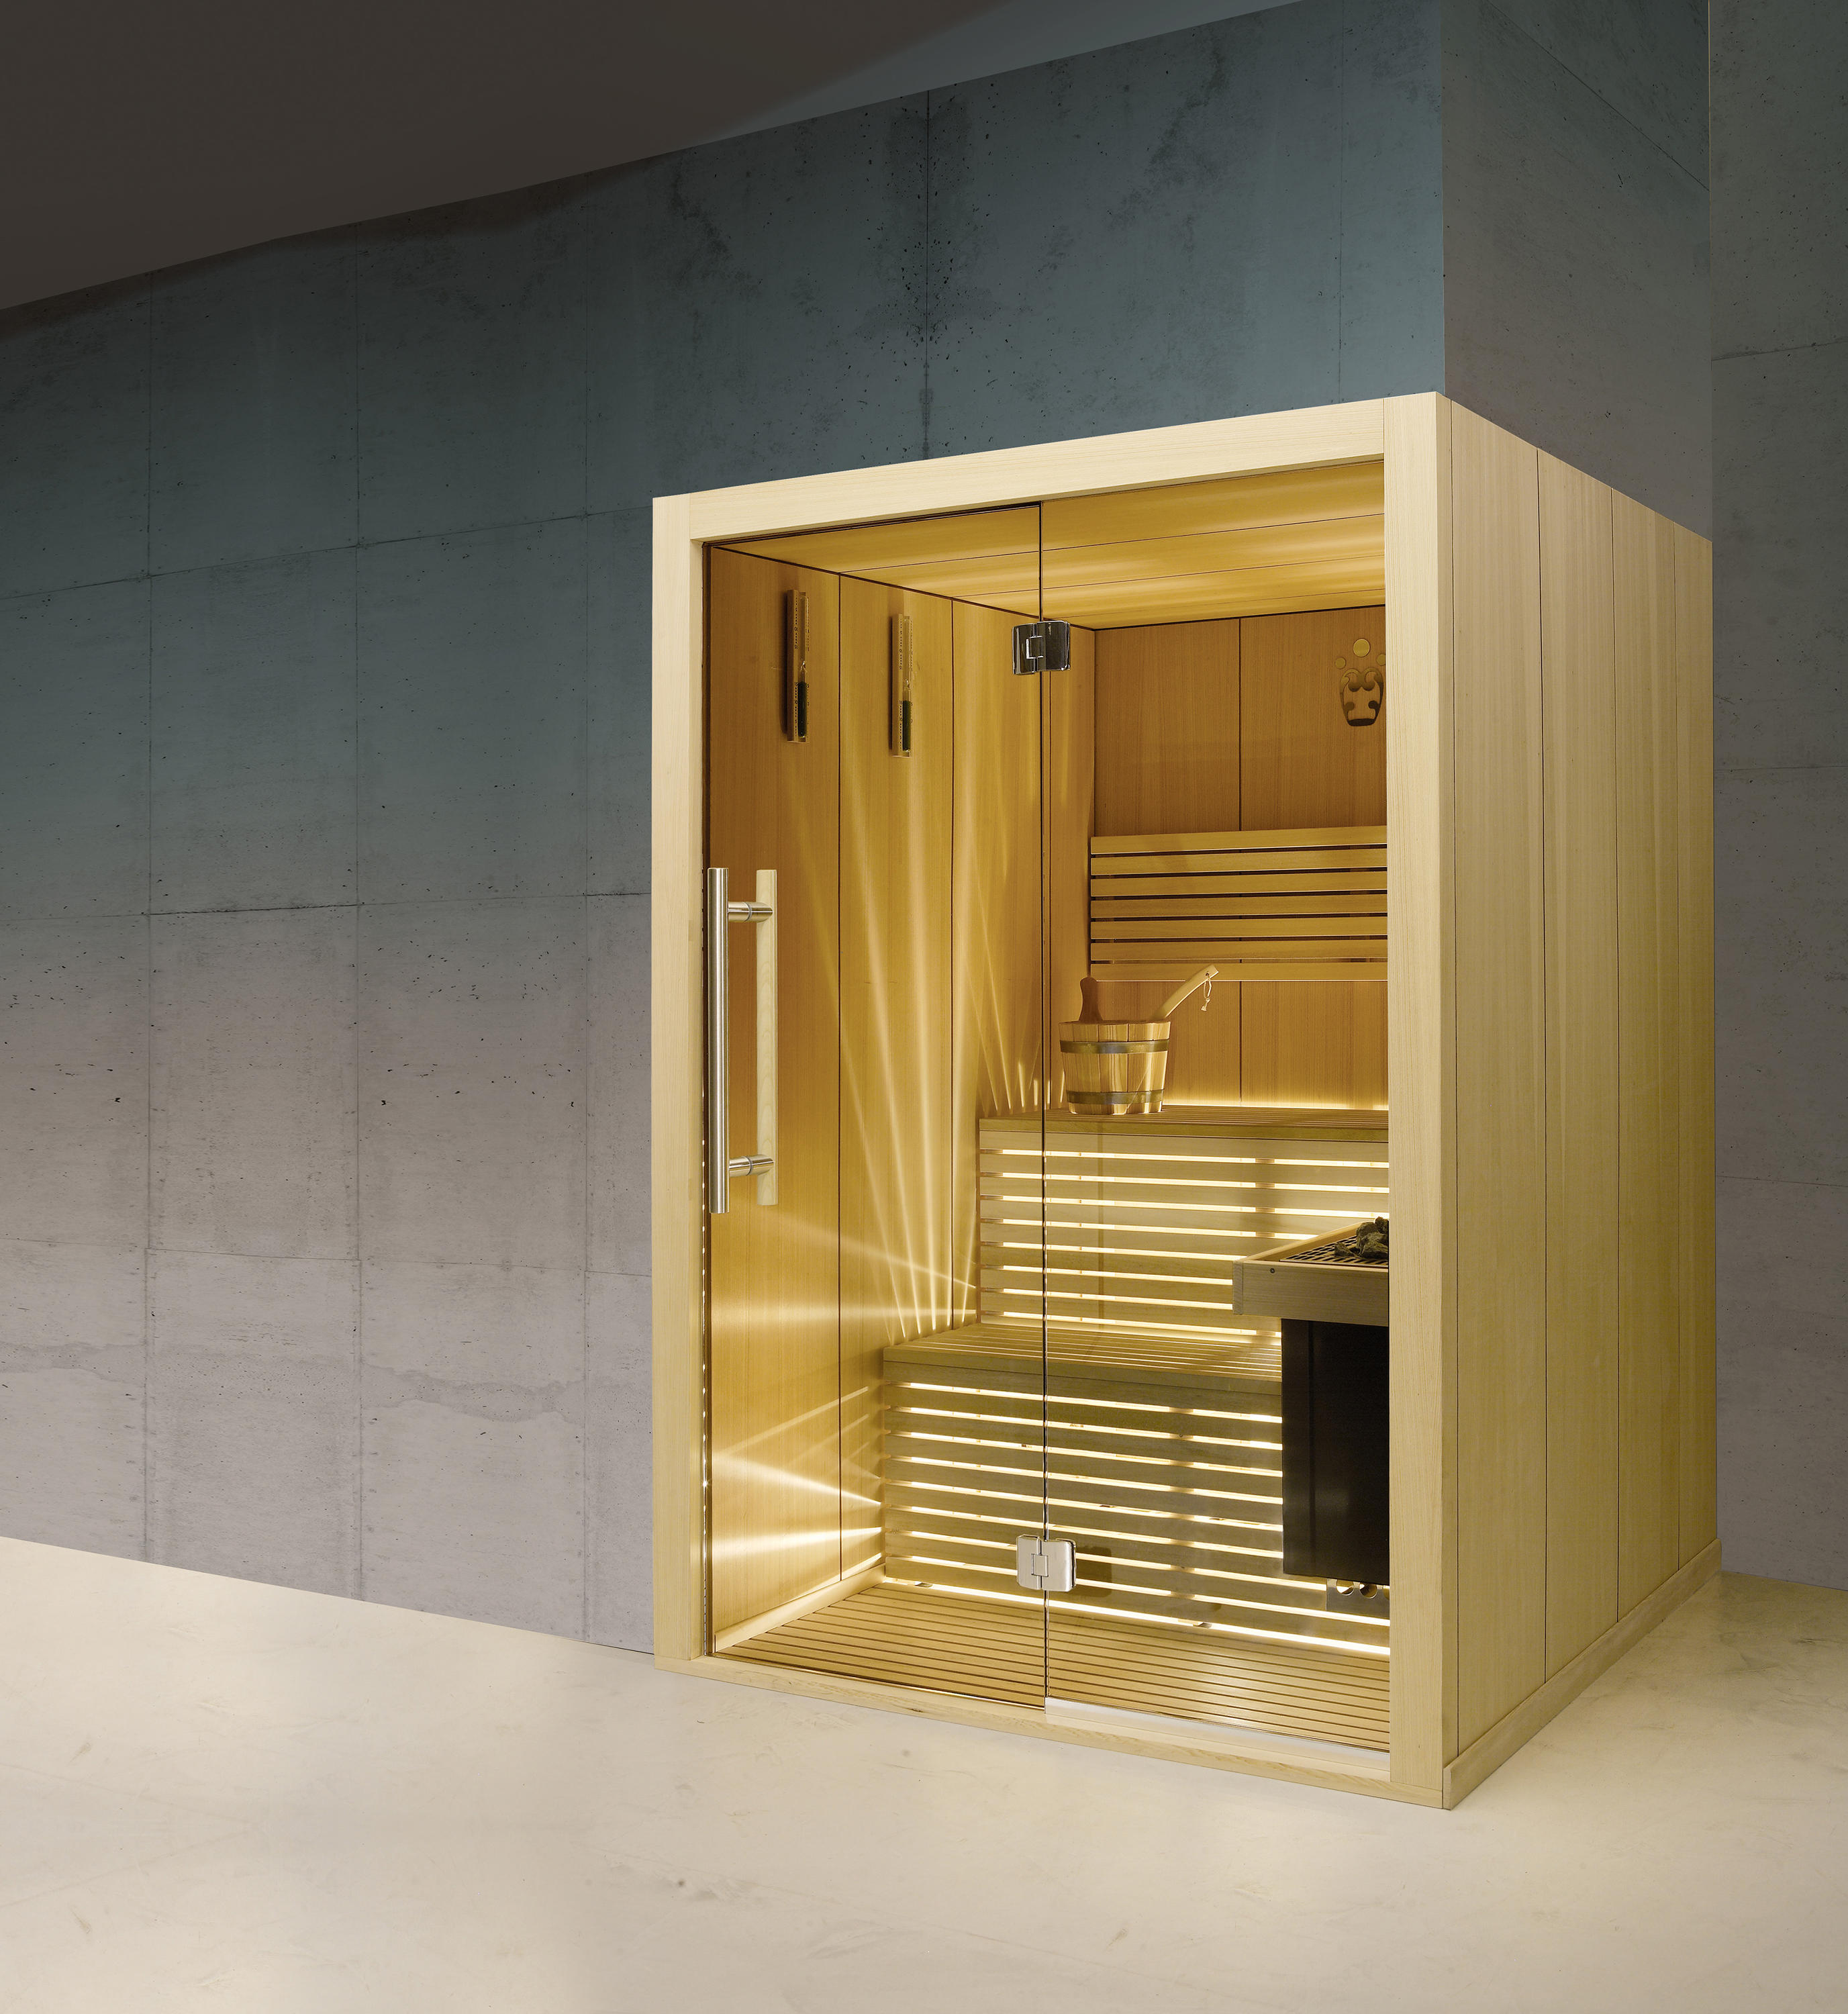 Sensation Sauna Small & designer furniture | Architonic